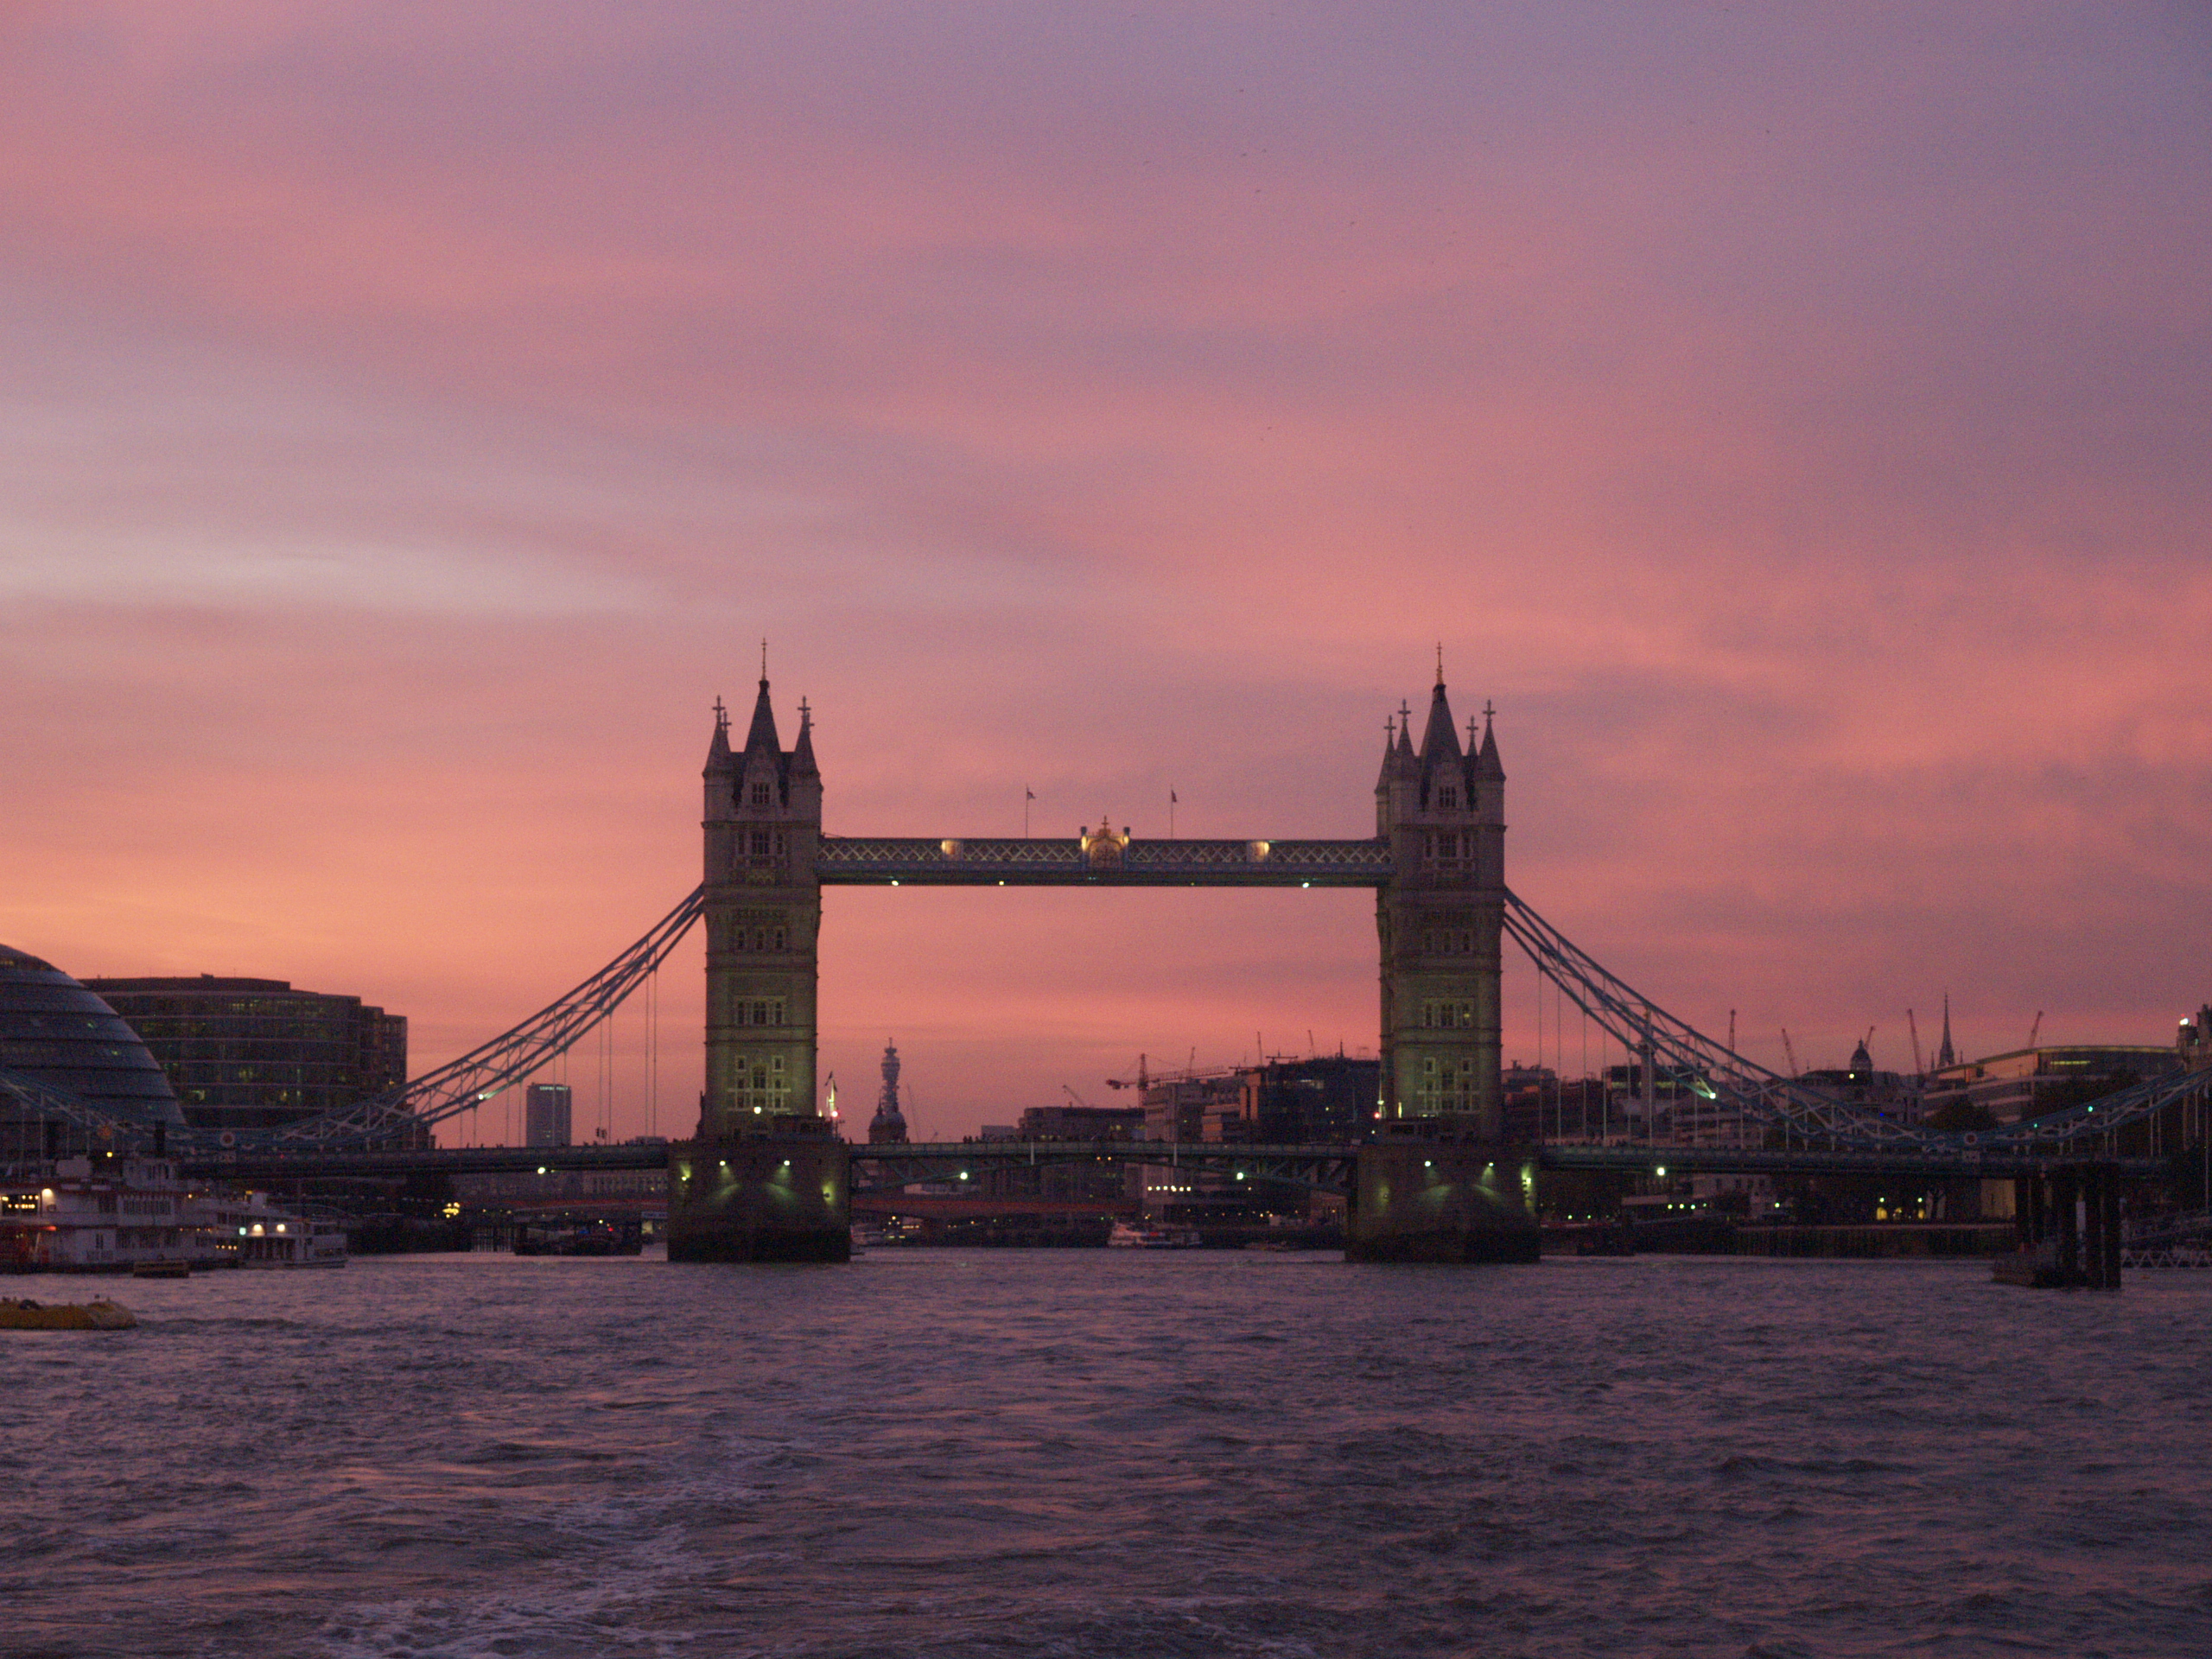 The Tower Bridge at sunset